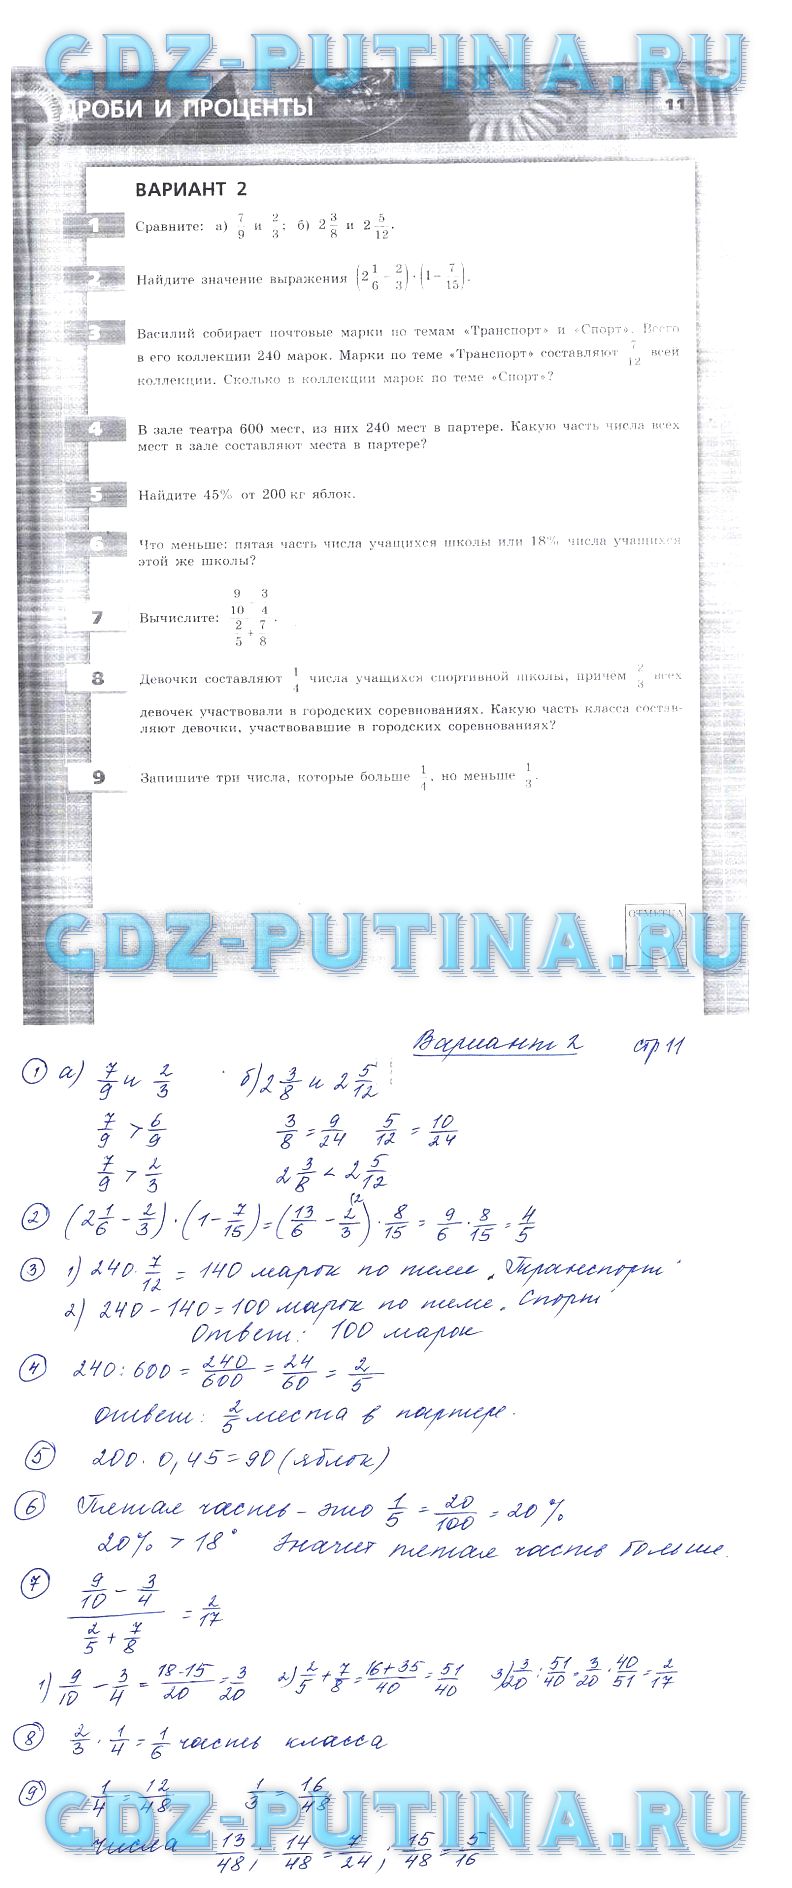 гдз 6 класс тетрадь-экзаменатор страница 11 математика Кузнецова